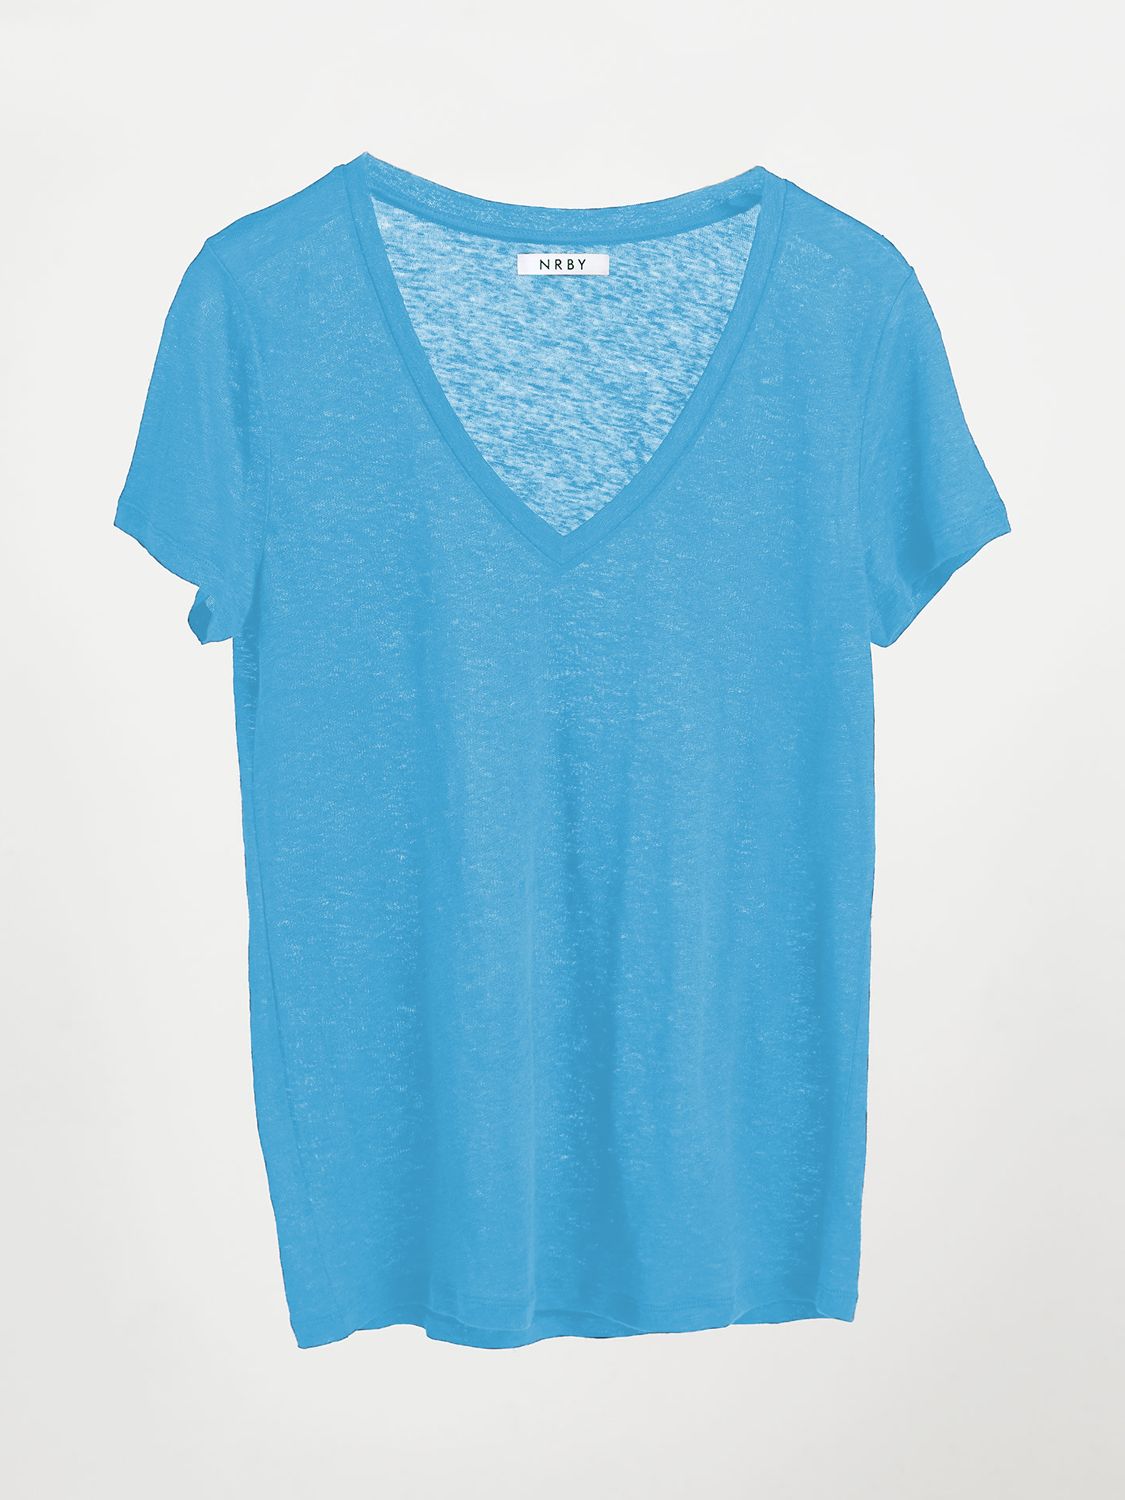 NRBY Charlie Linen V Neck T-Shirt, Turquoise, XS